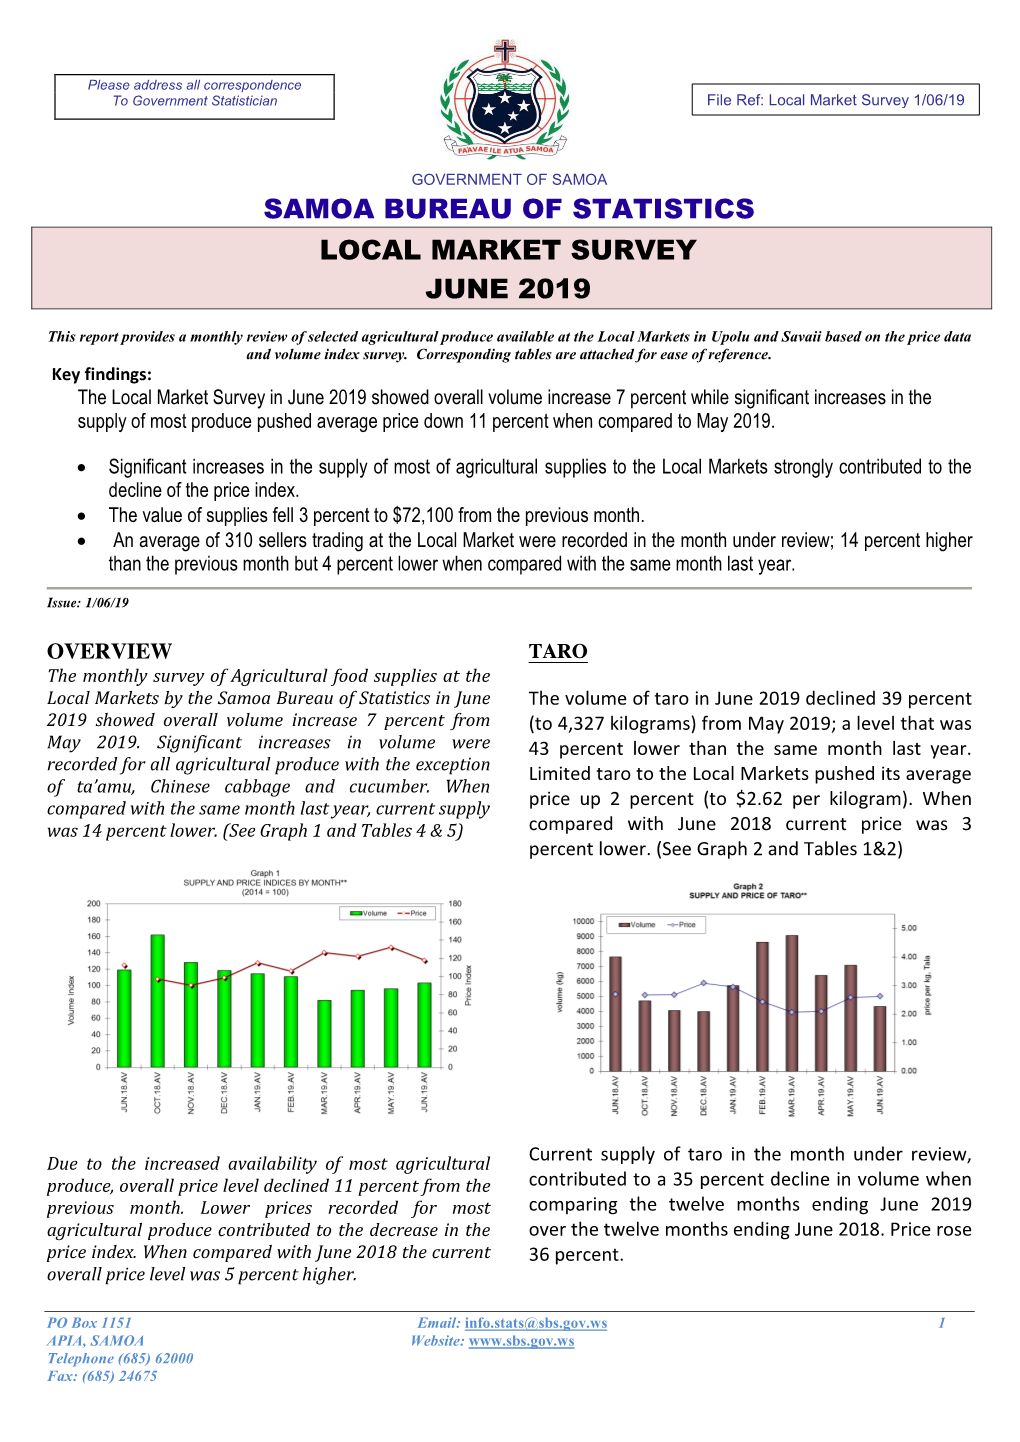 Local Market Survey in June 2019